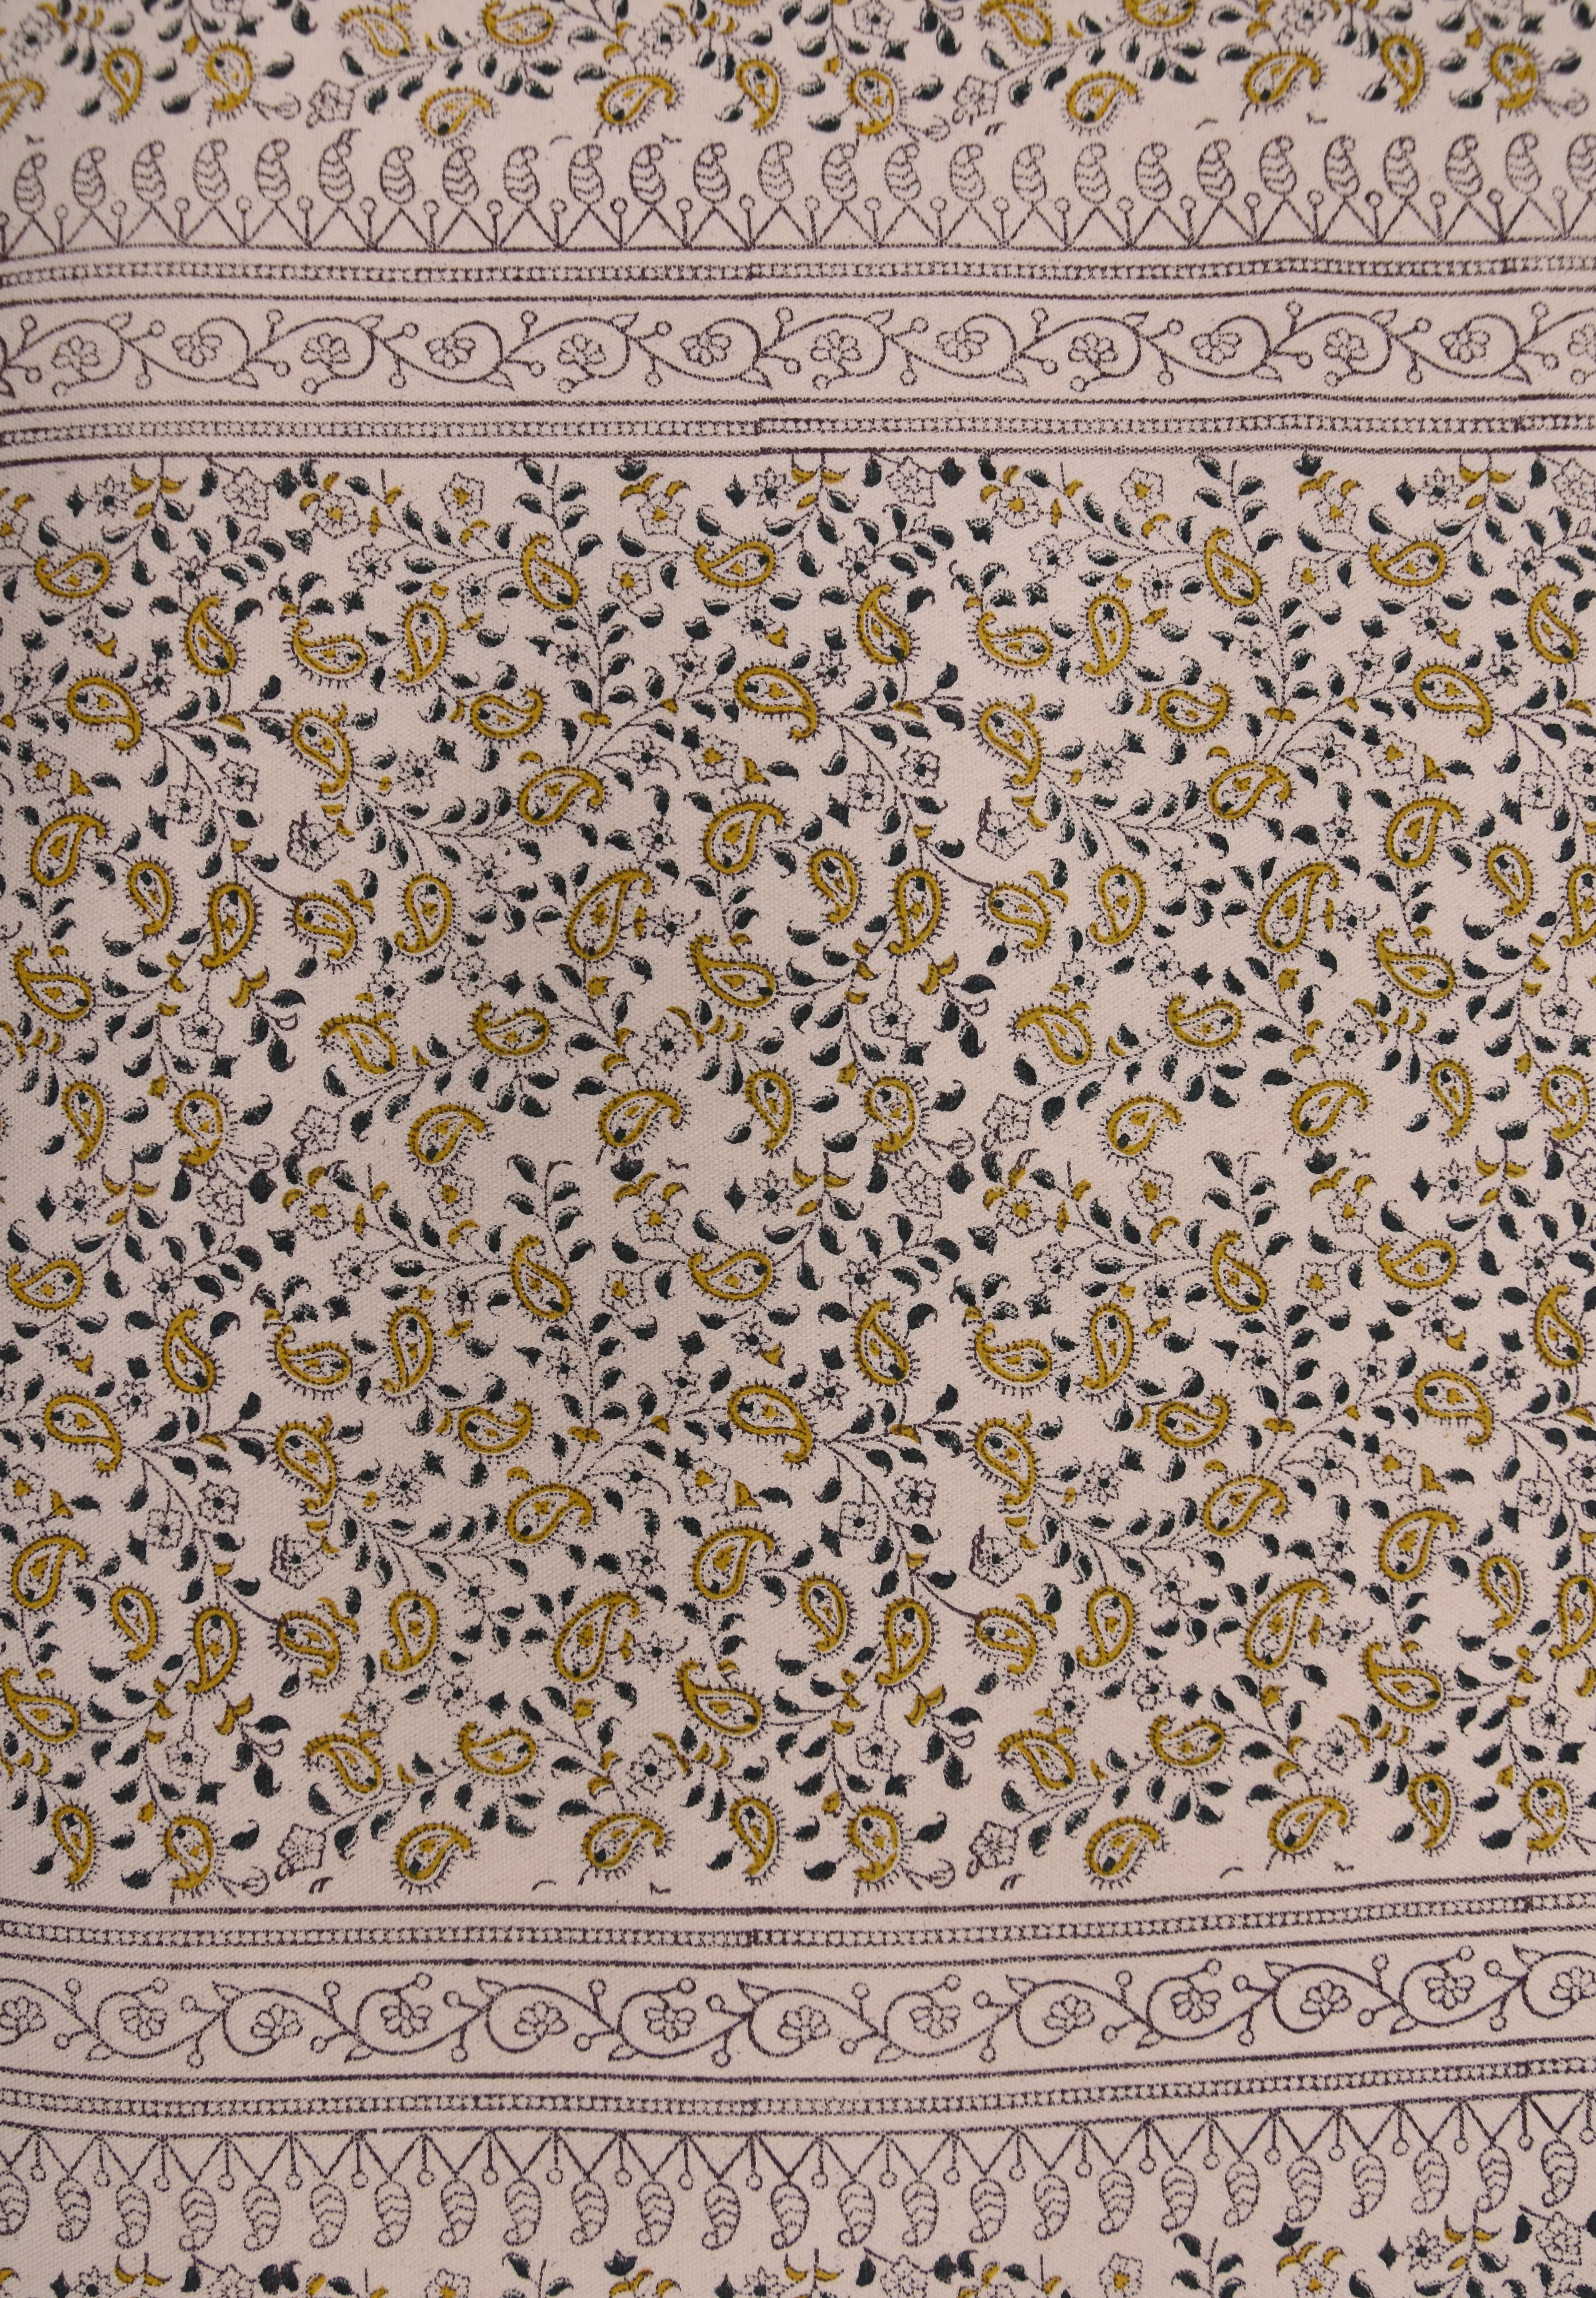 Handmade block print duck canvas 50" wide, cushion fabric, linen floral block print, linen pillow covers - KERI BORDER